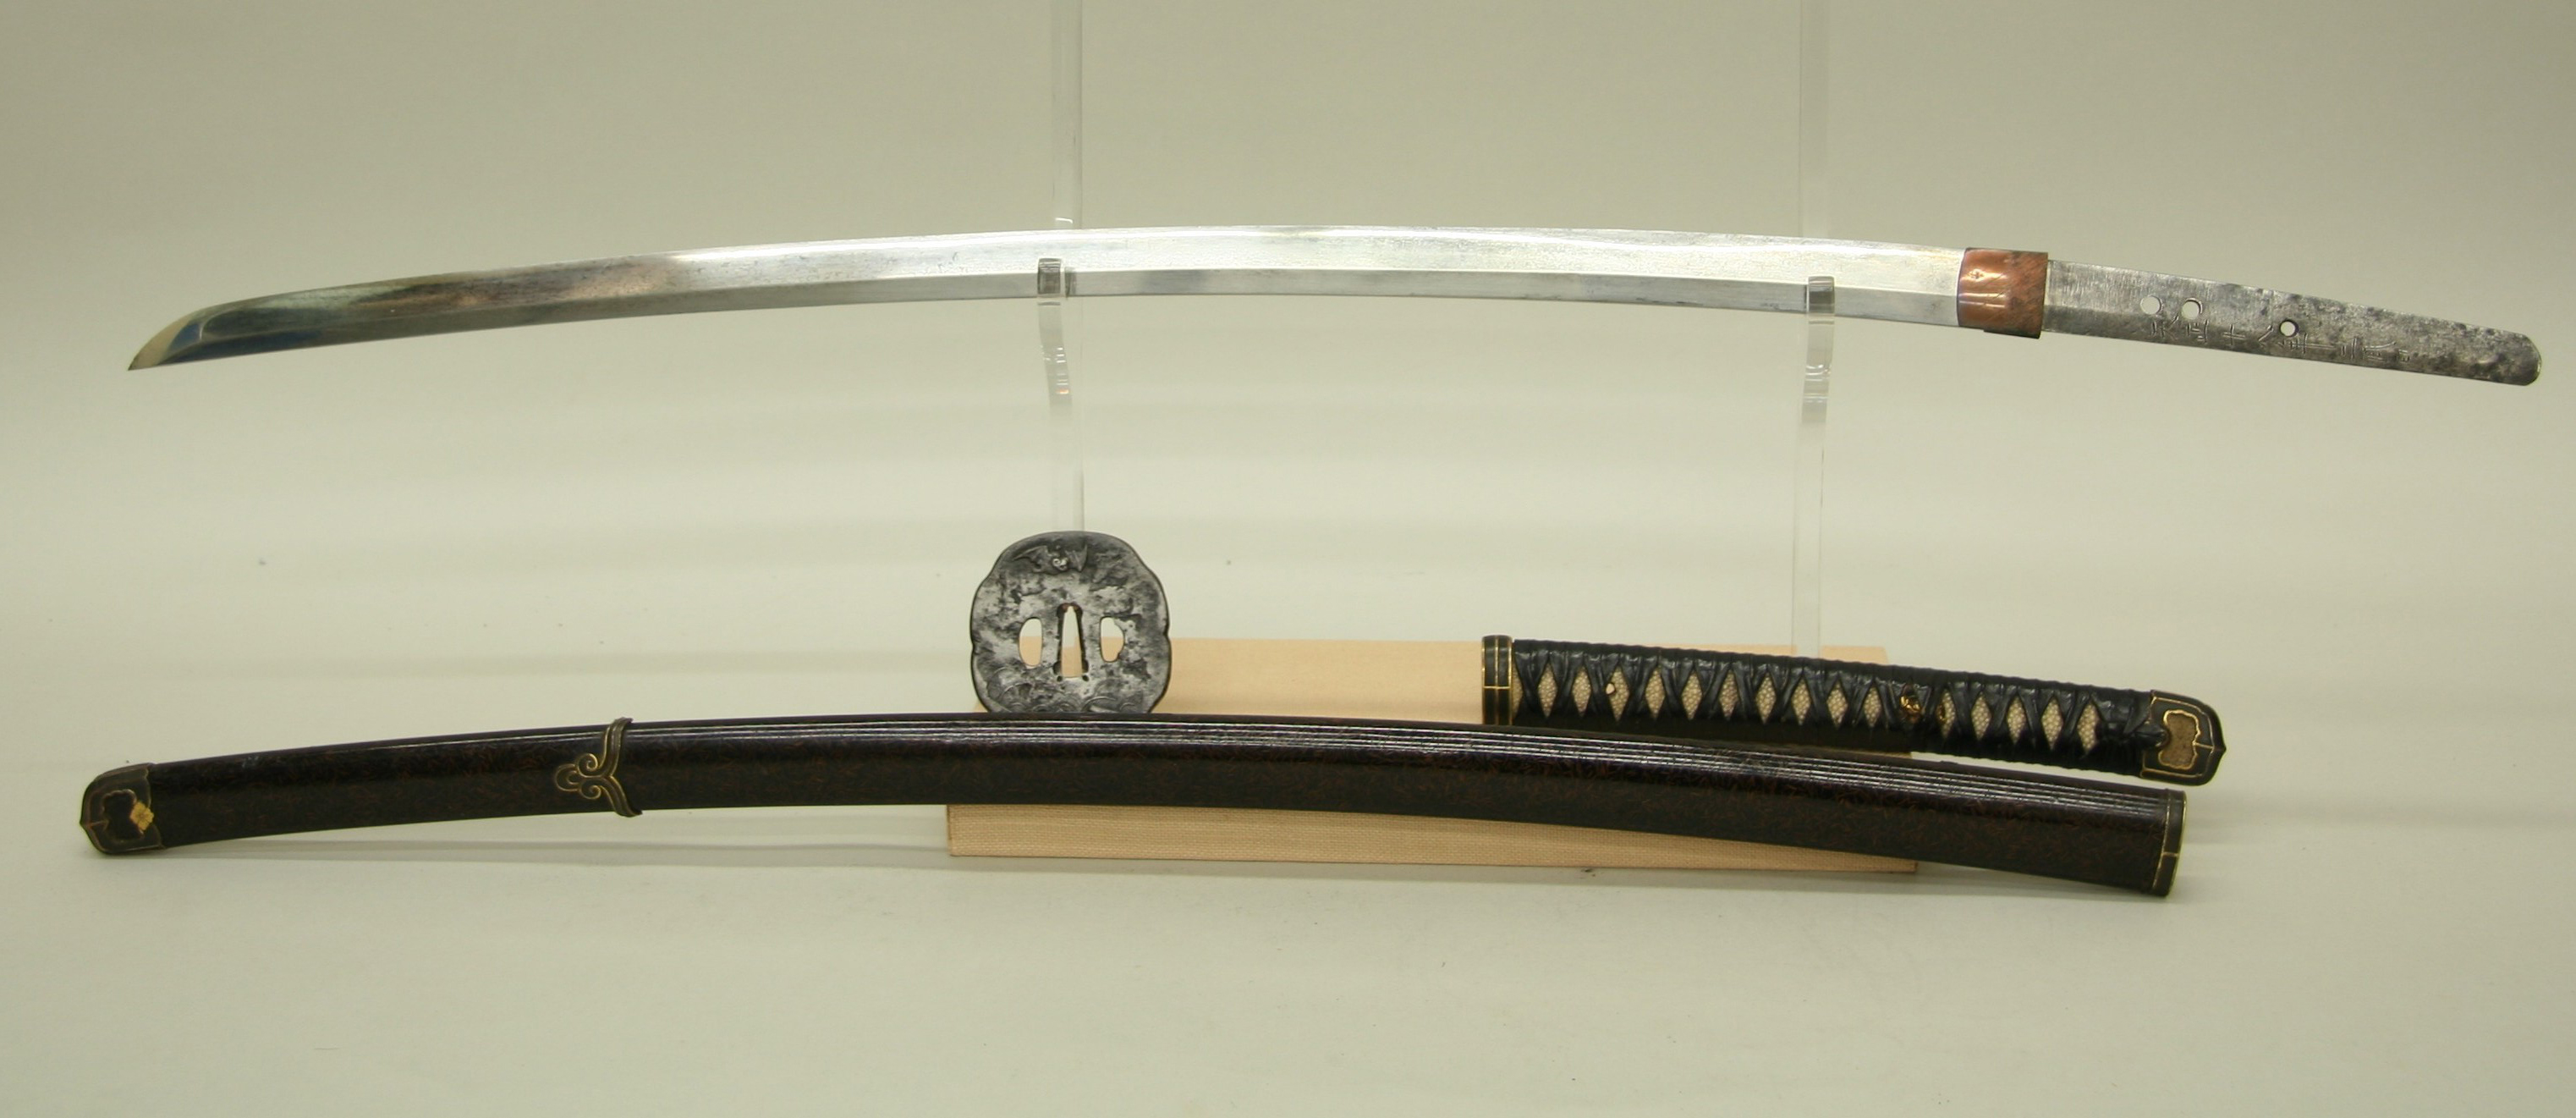 japanese sword museum